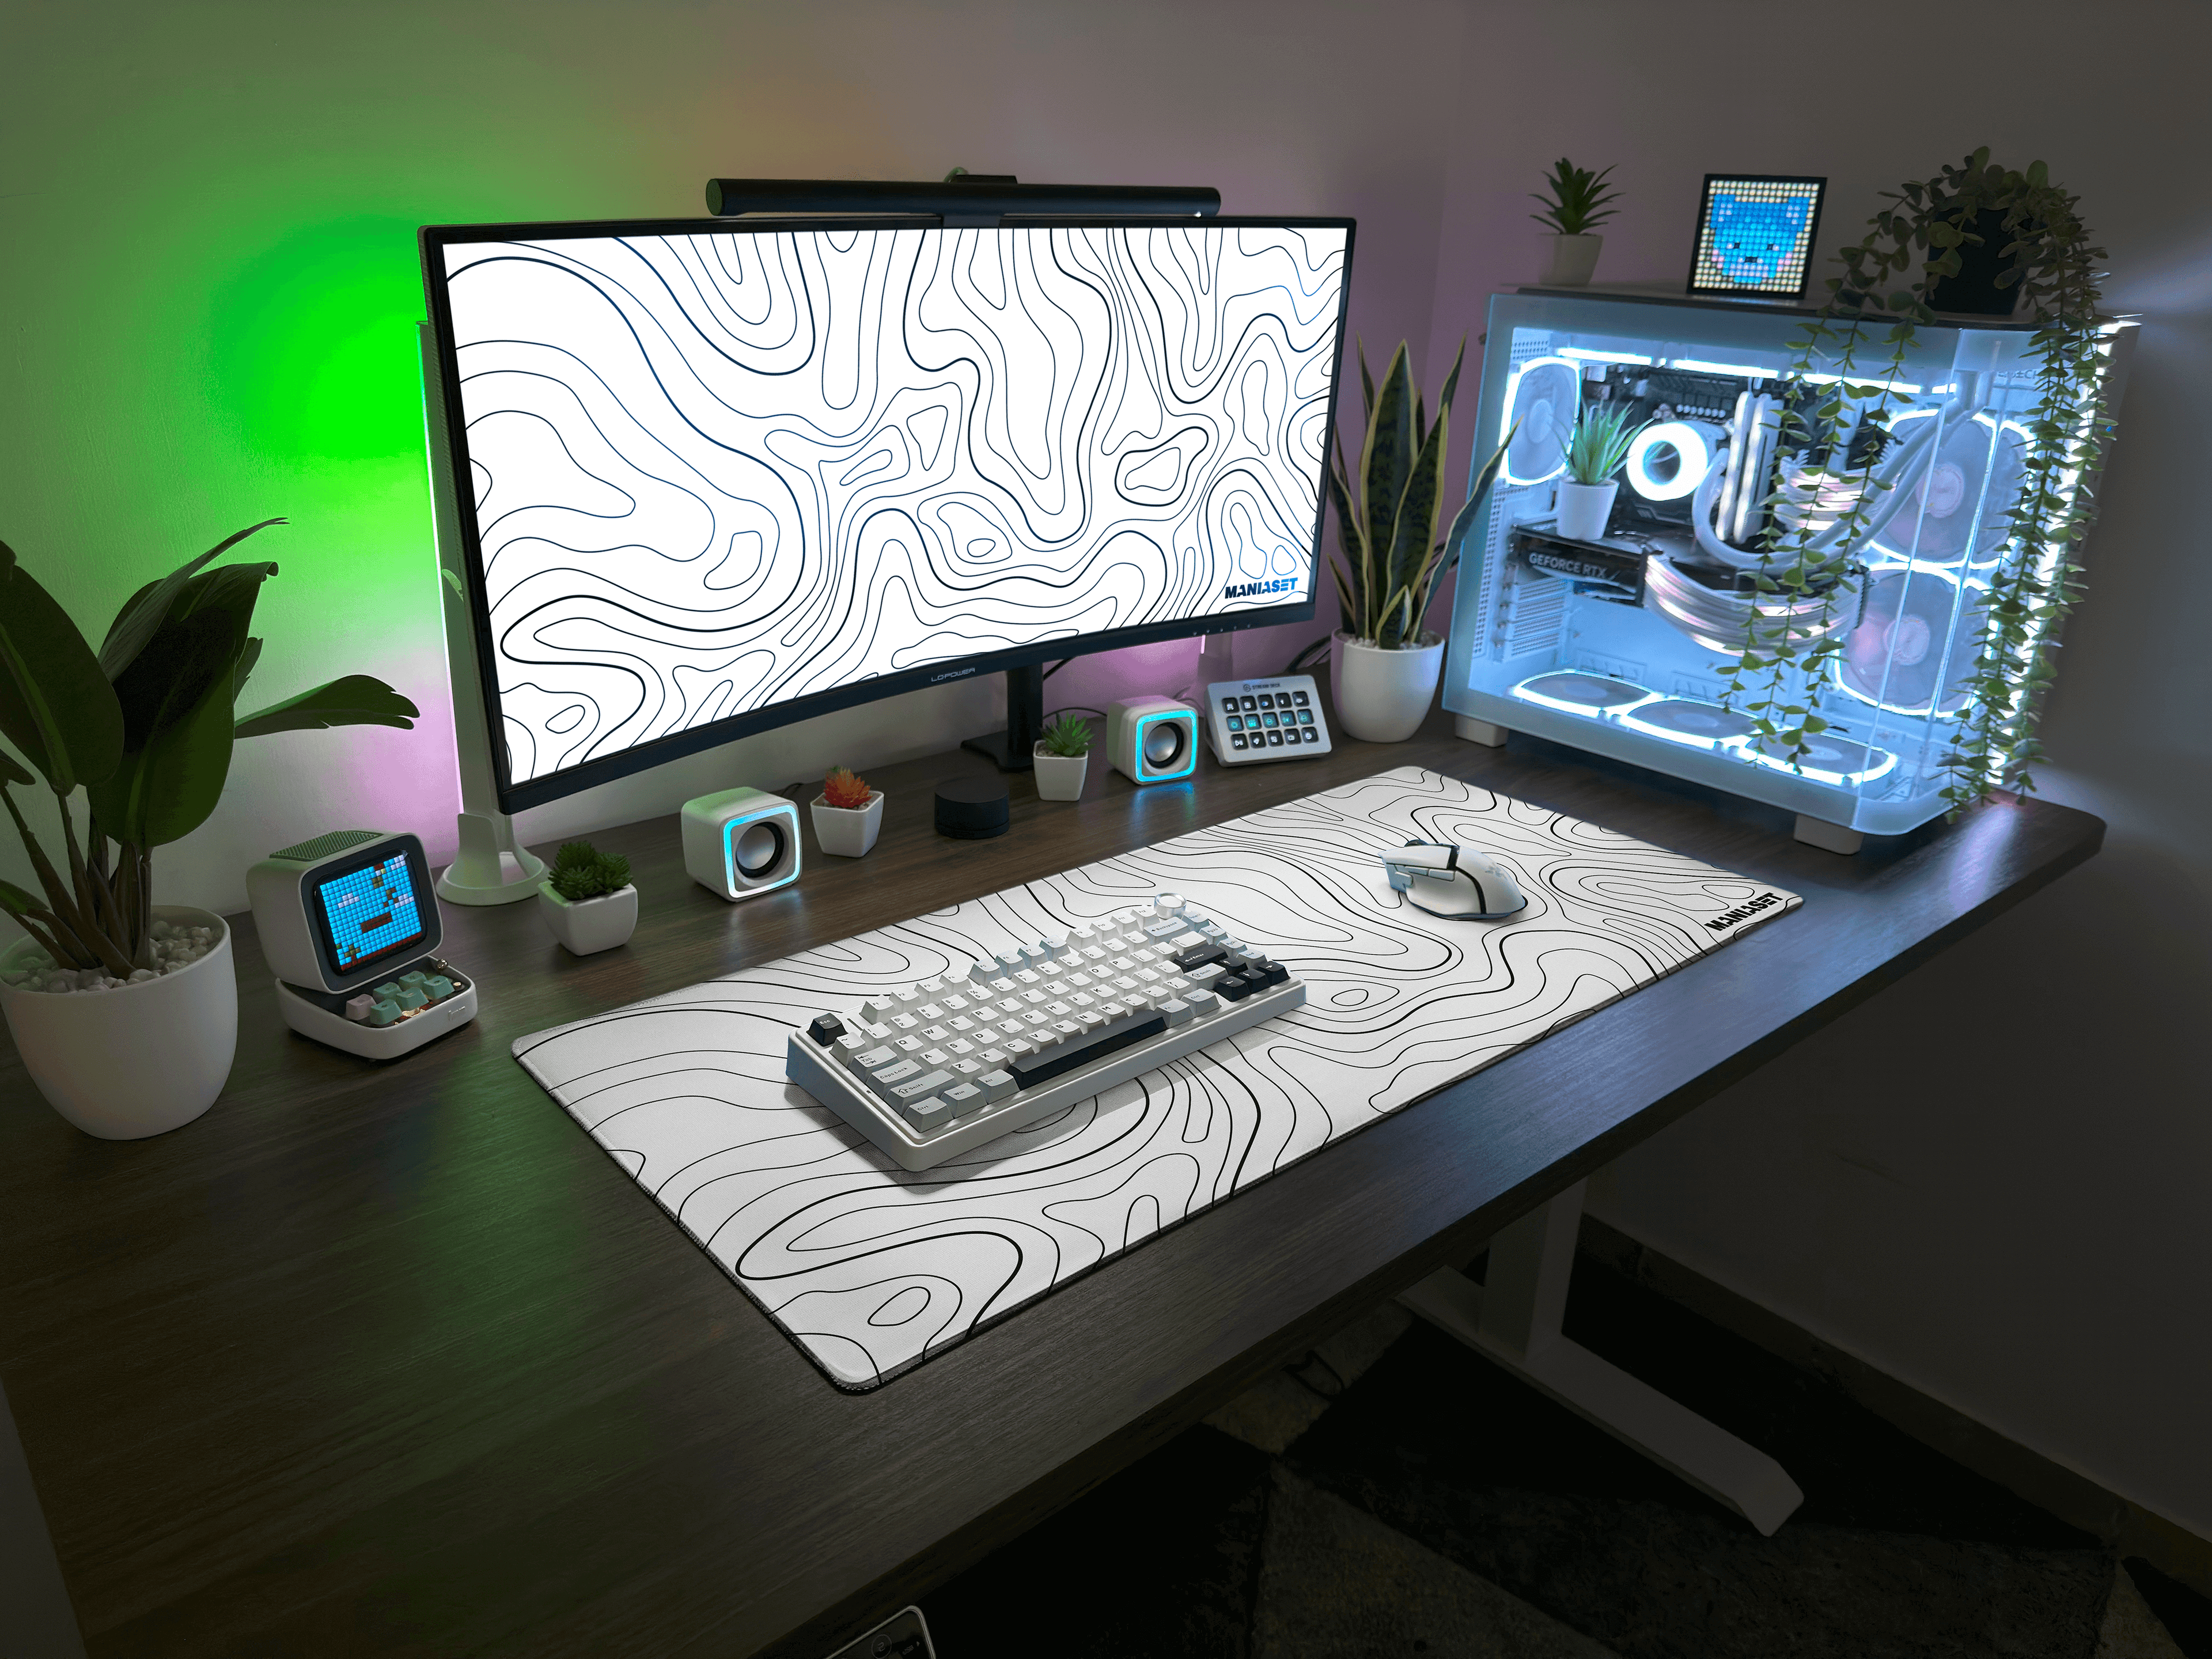 setup with pc, keyboard, mouse and maniaset mousepad